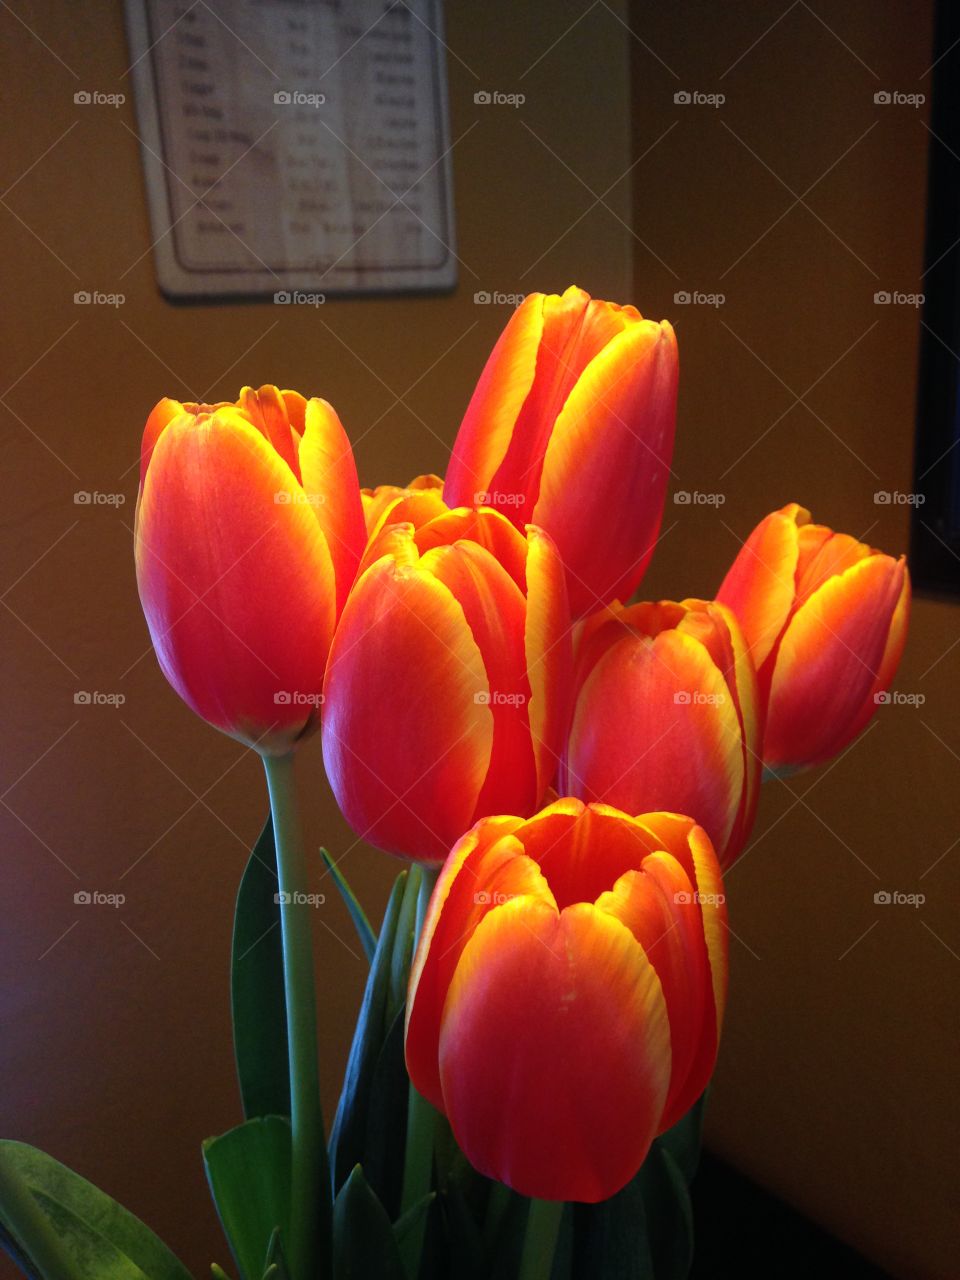 Flaming tulips 